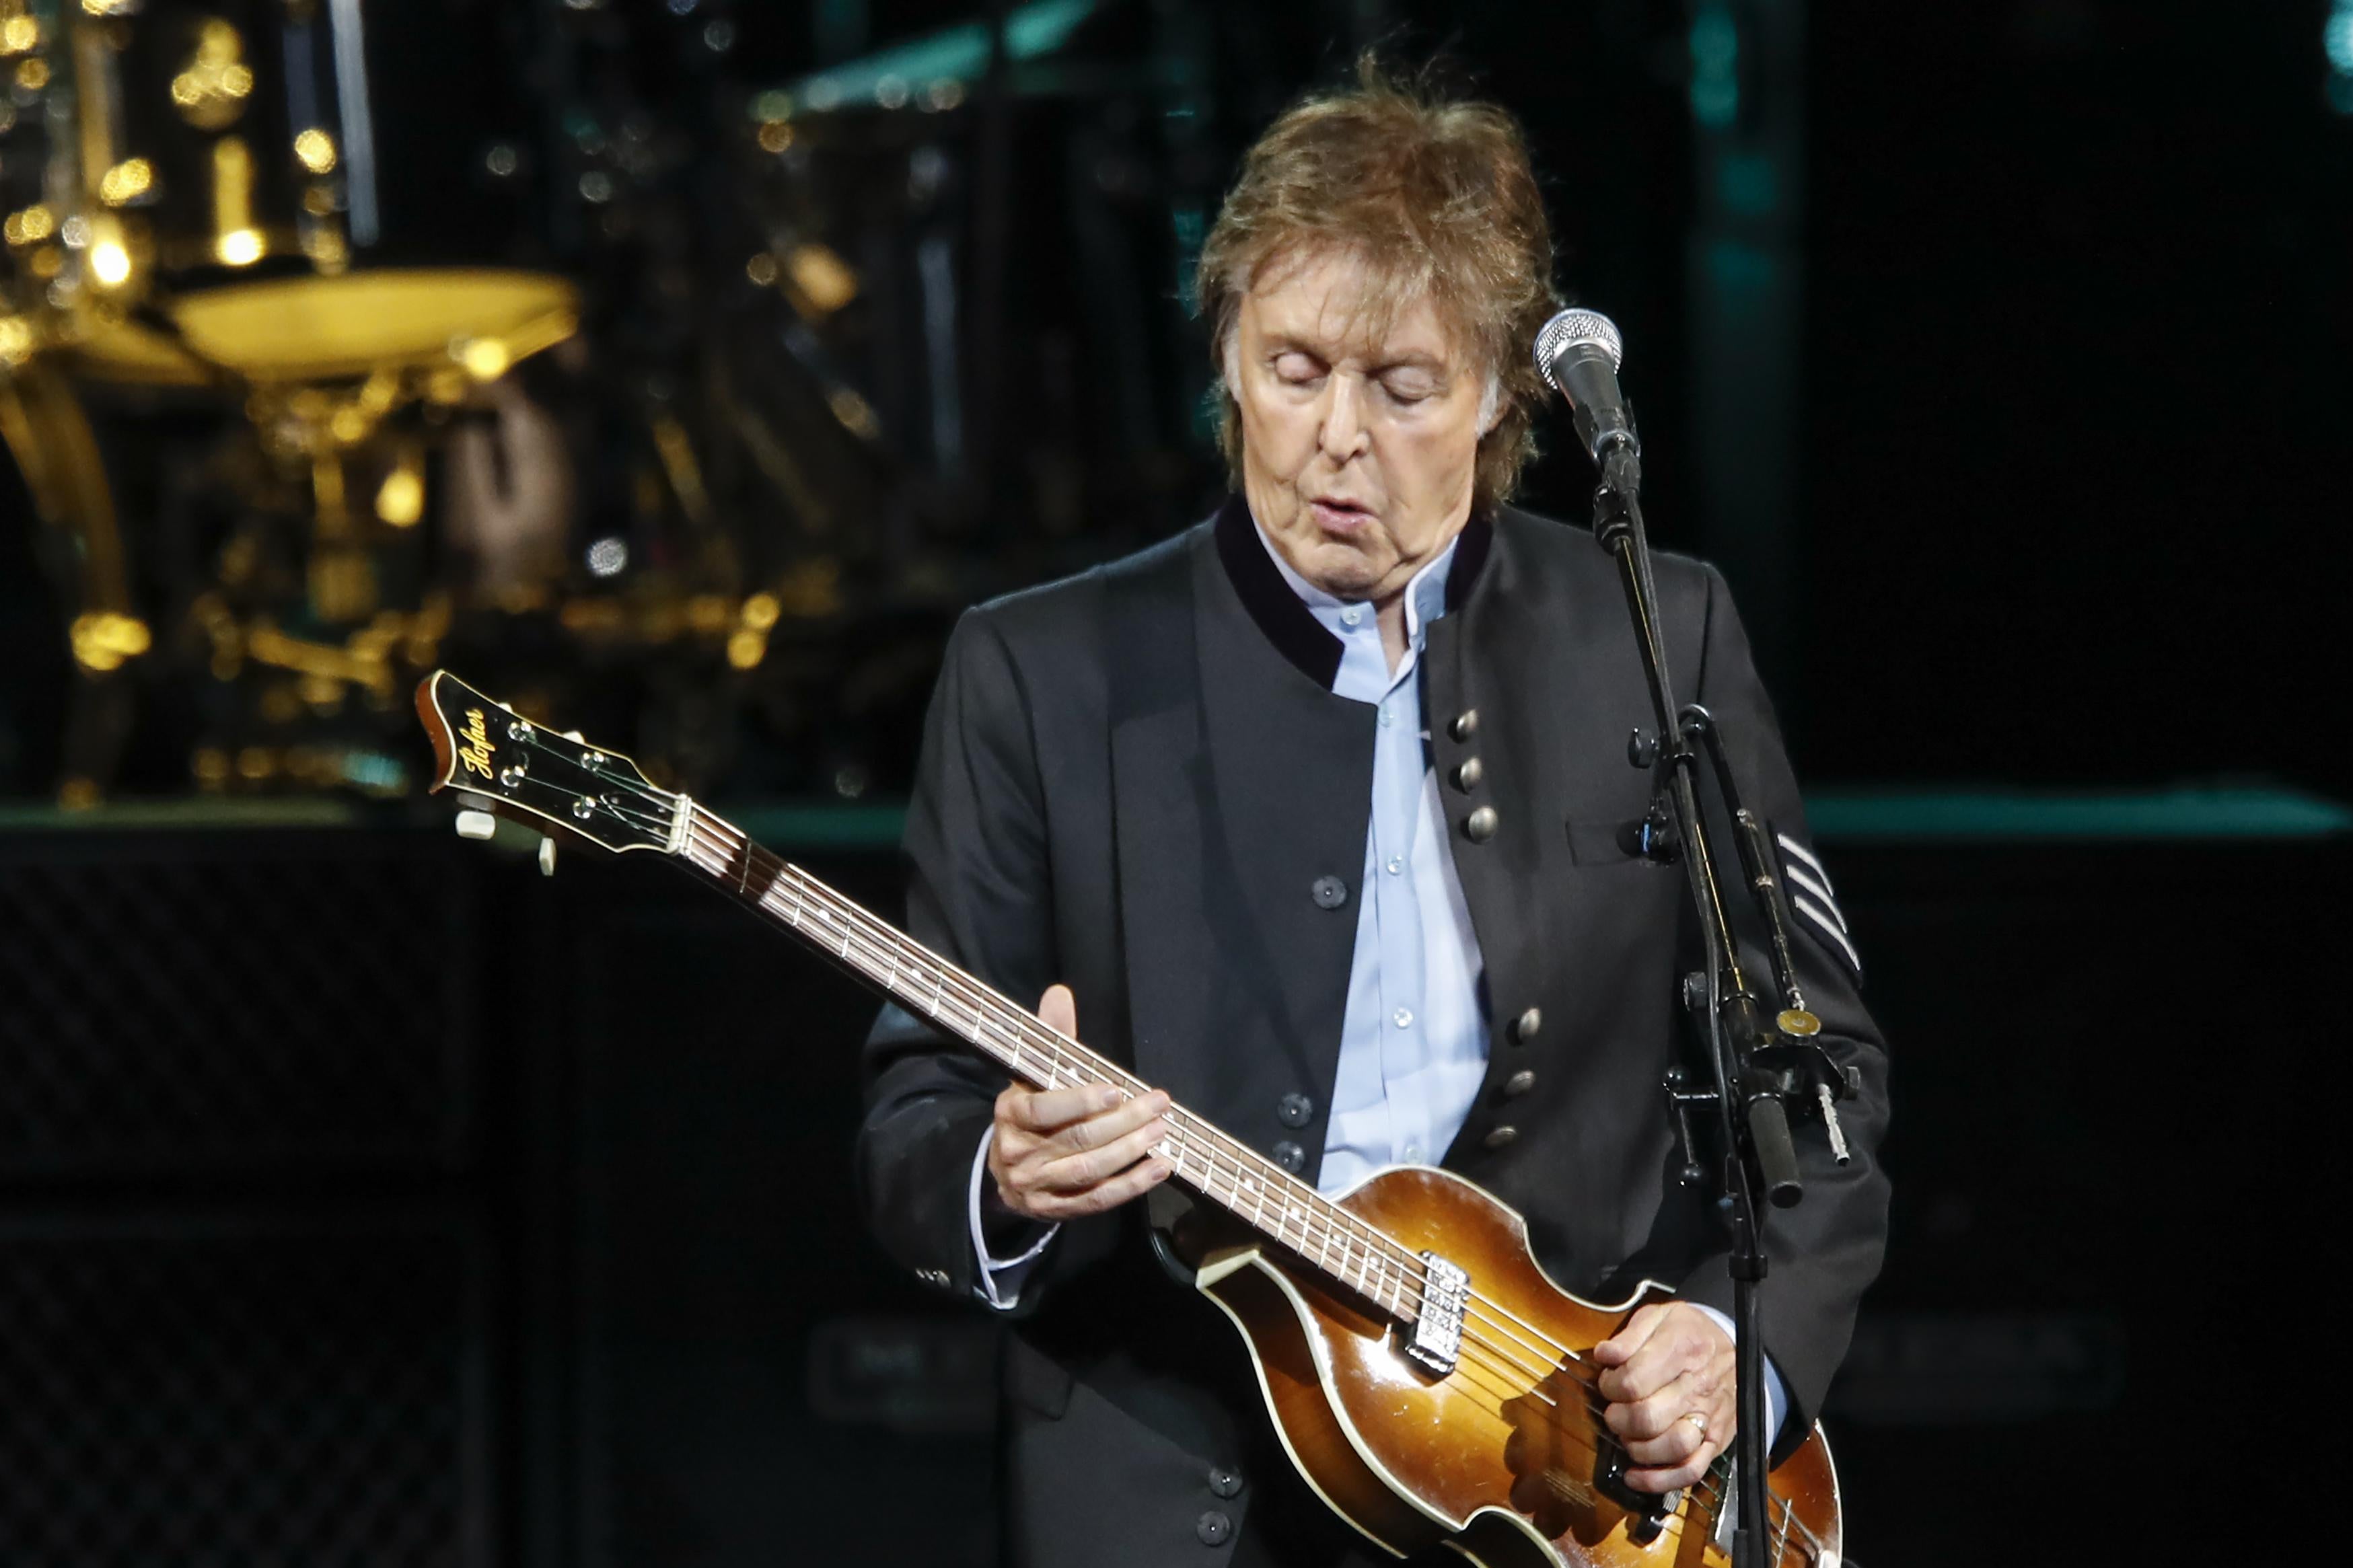 Paul McCartney plays a guitar onstage.